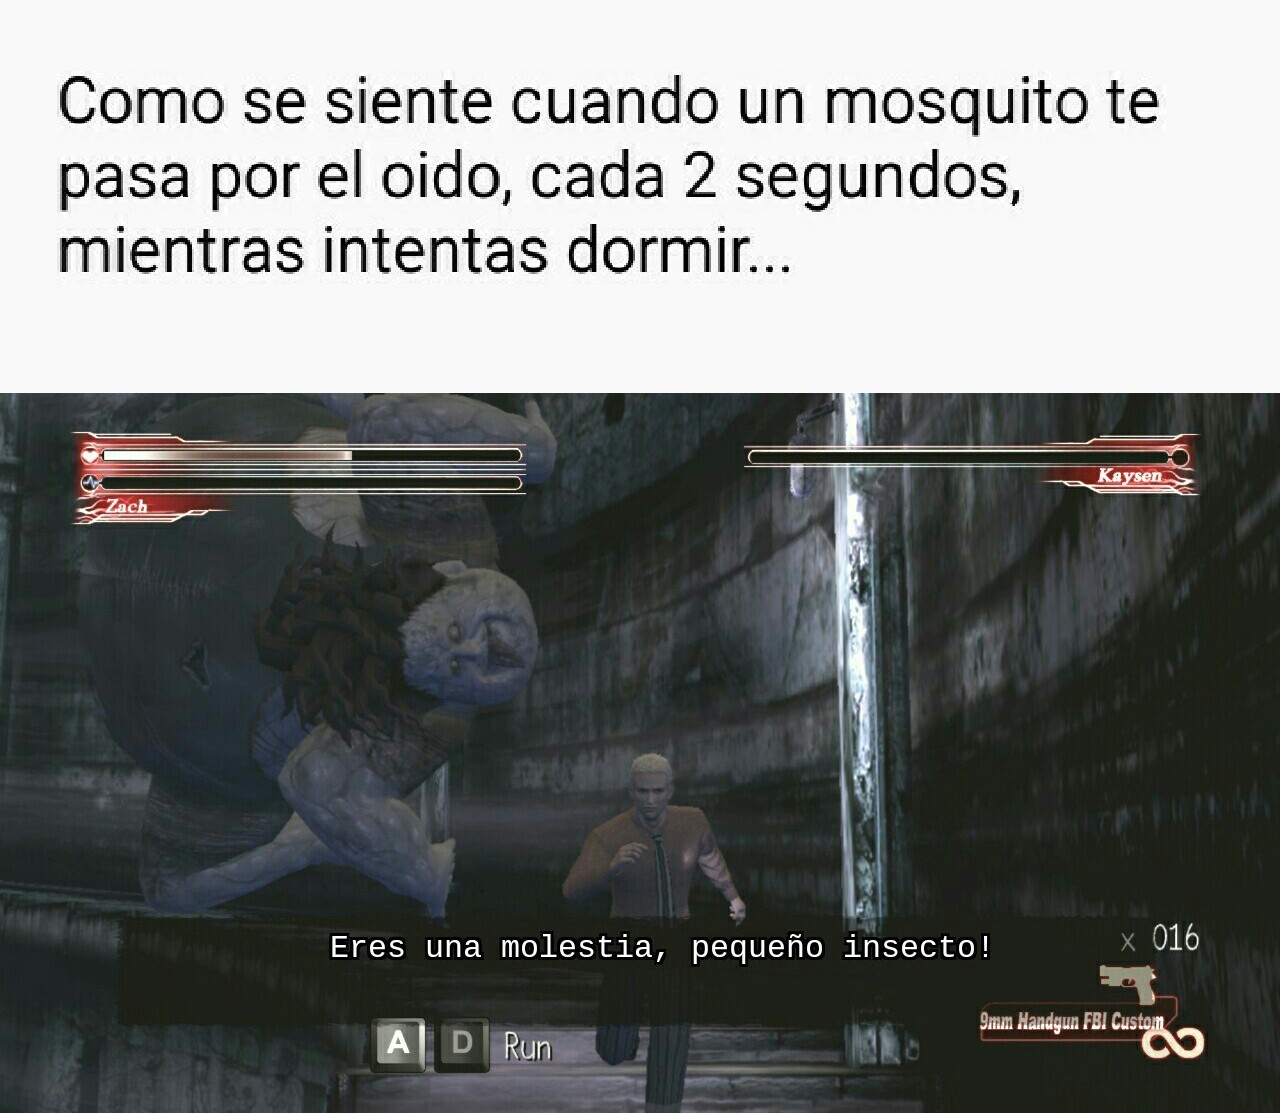 mosquitos de mierd4 - meme